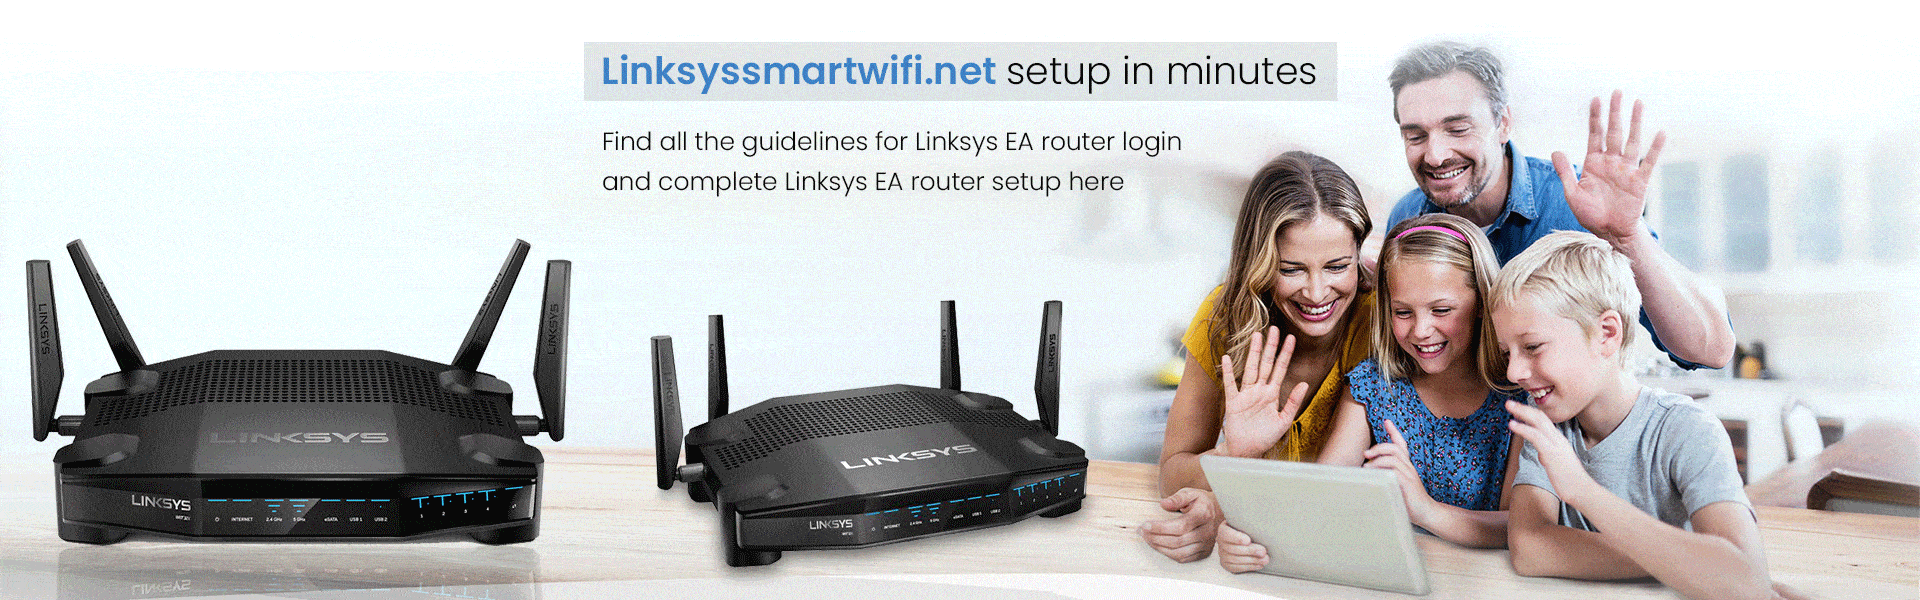 linksyssmartwifi.net setup in minutes. Linkysys EA router login linksys router setup.